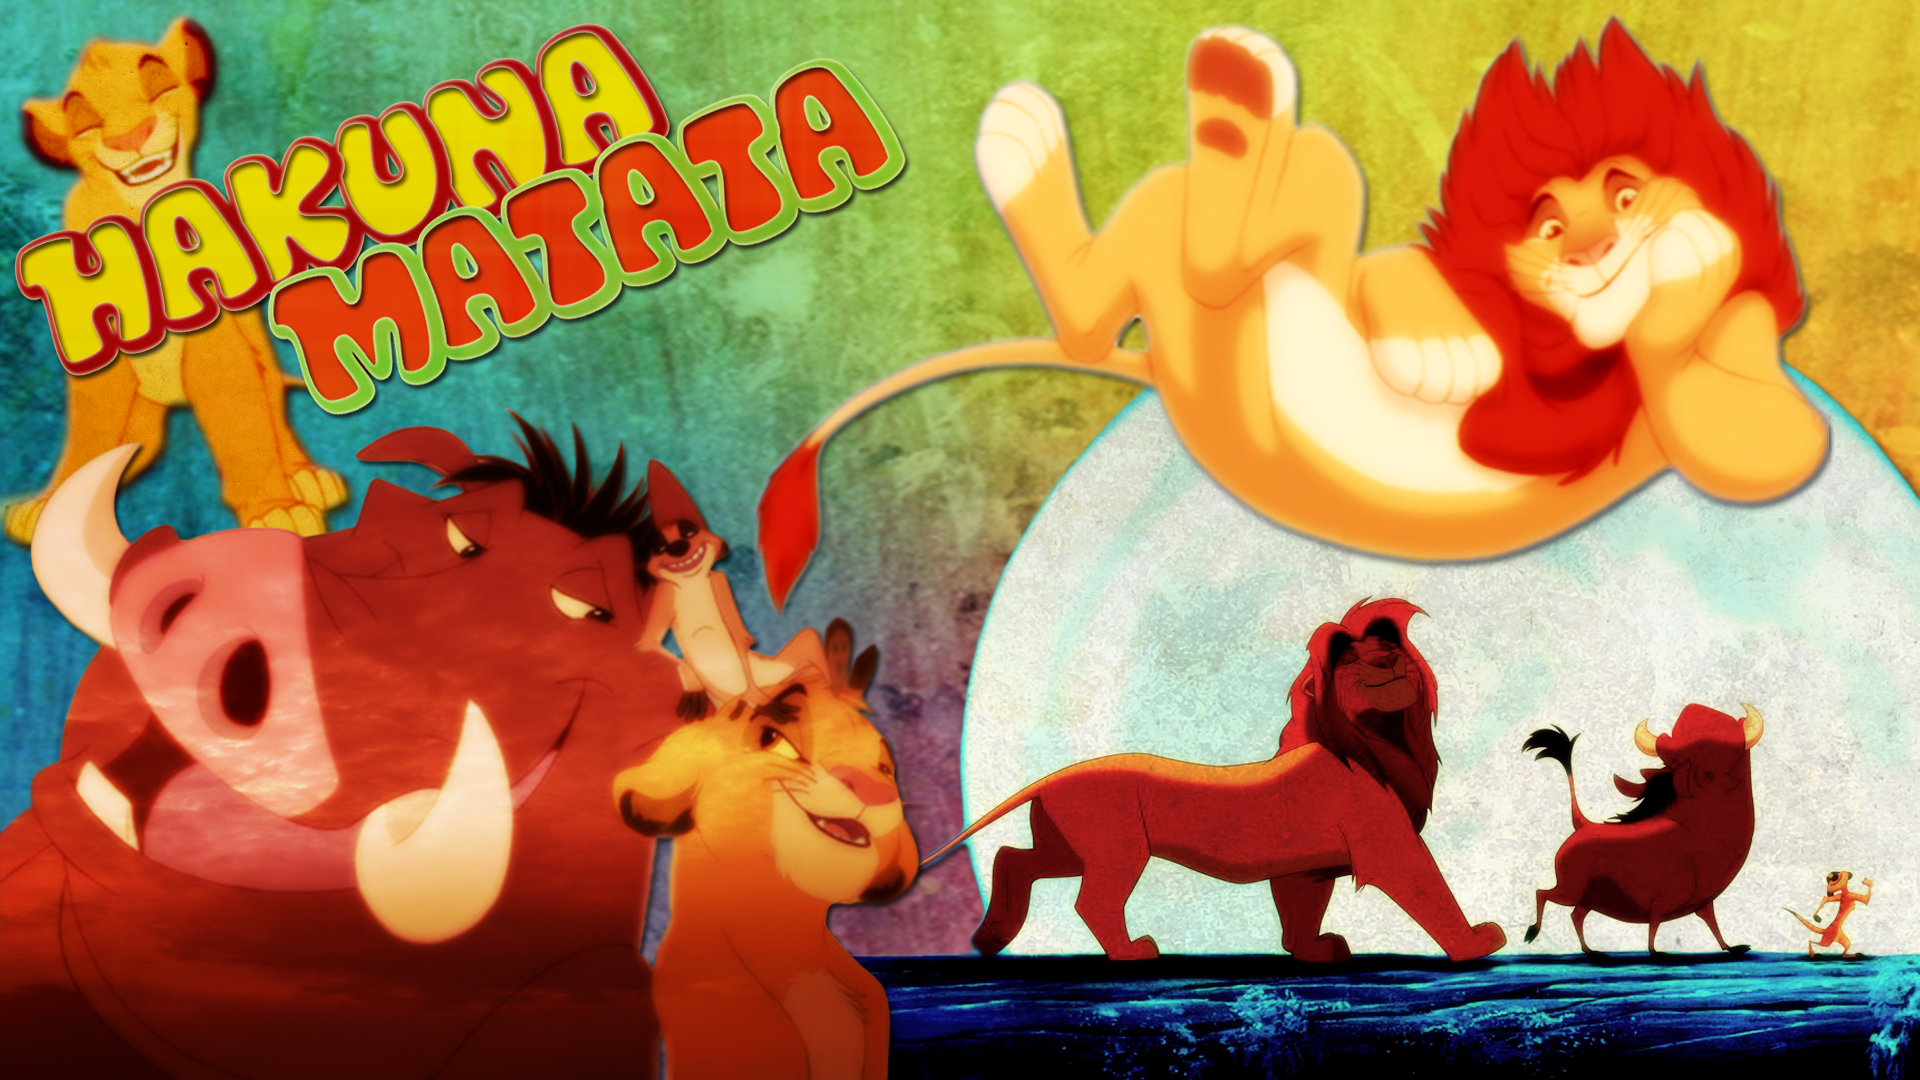 Simba Hakuna Matata Pumbaa The Lion King Timon The Lion King The Lion King 1920x1080